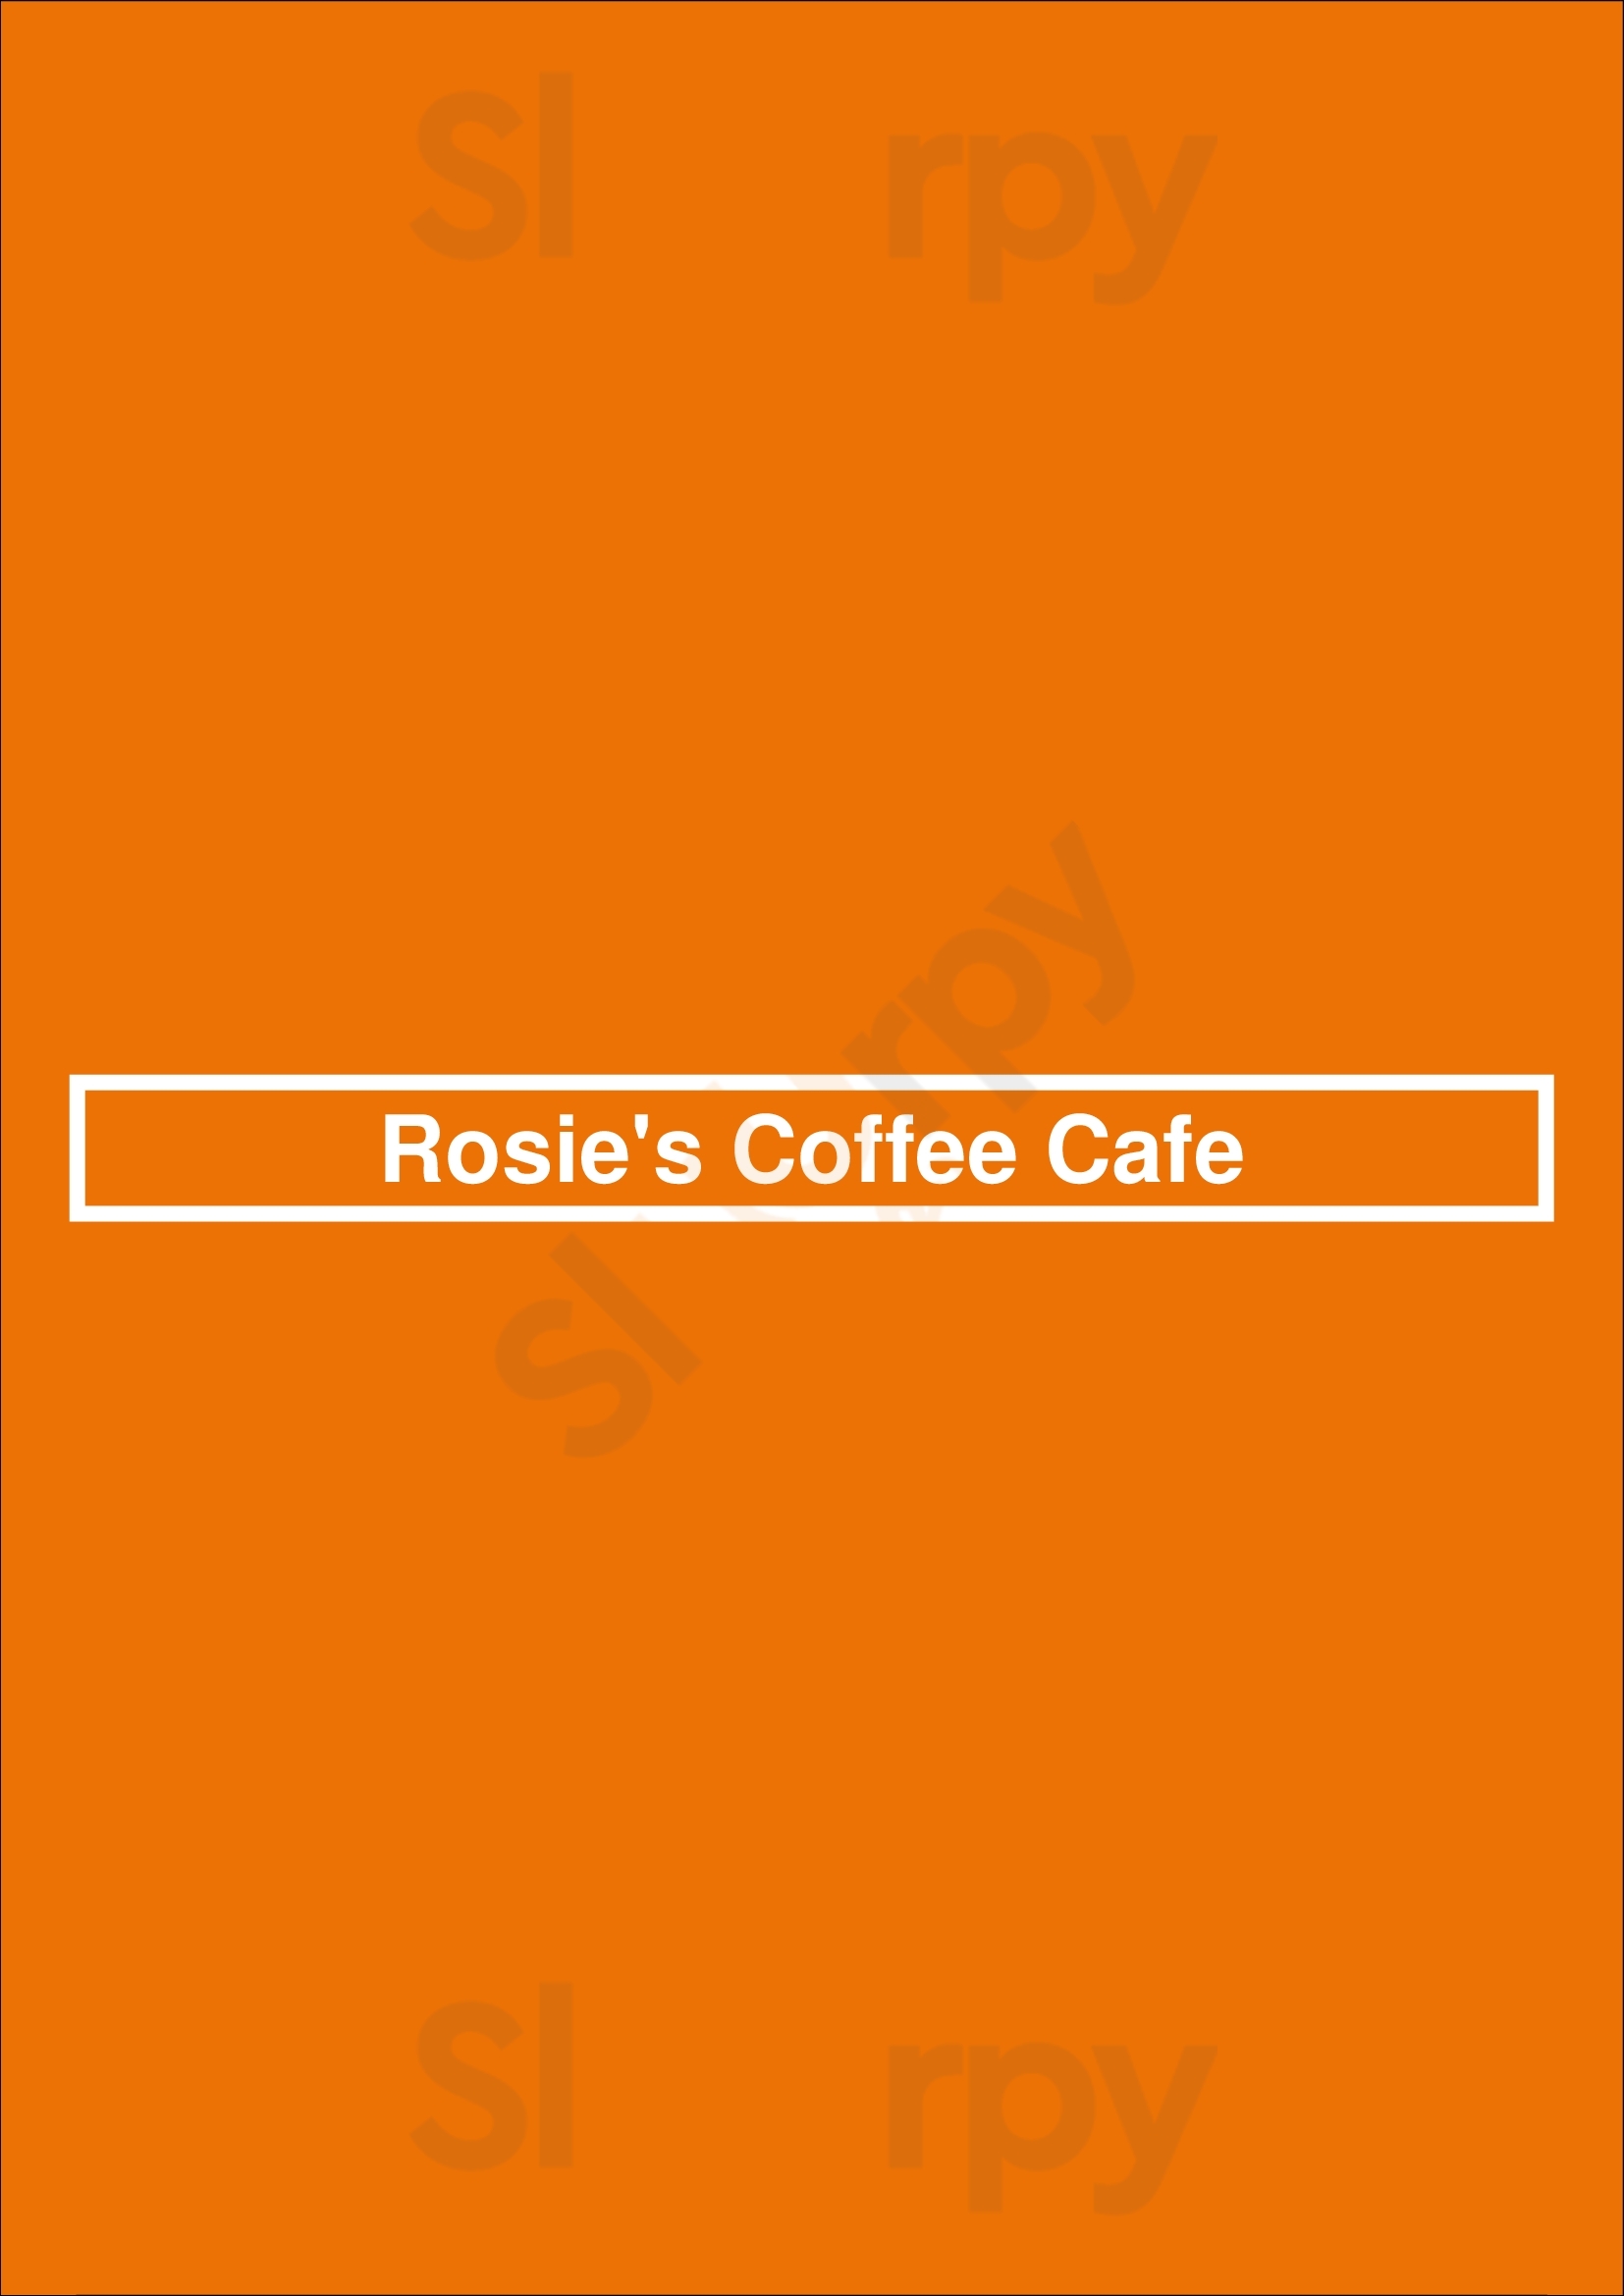 Rosie's Coffee Cafe Atlanta Menu - 1